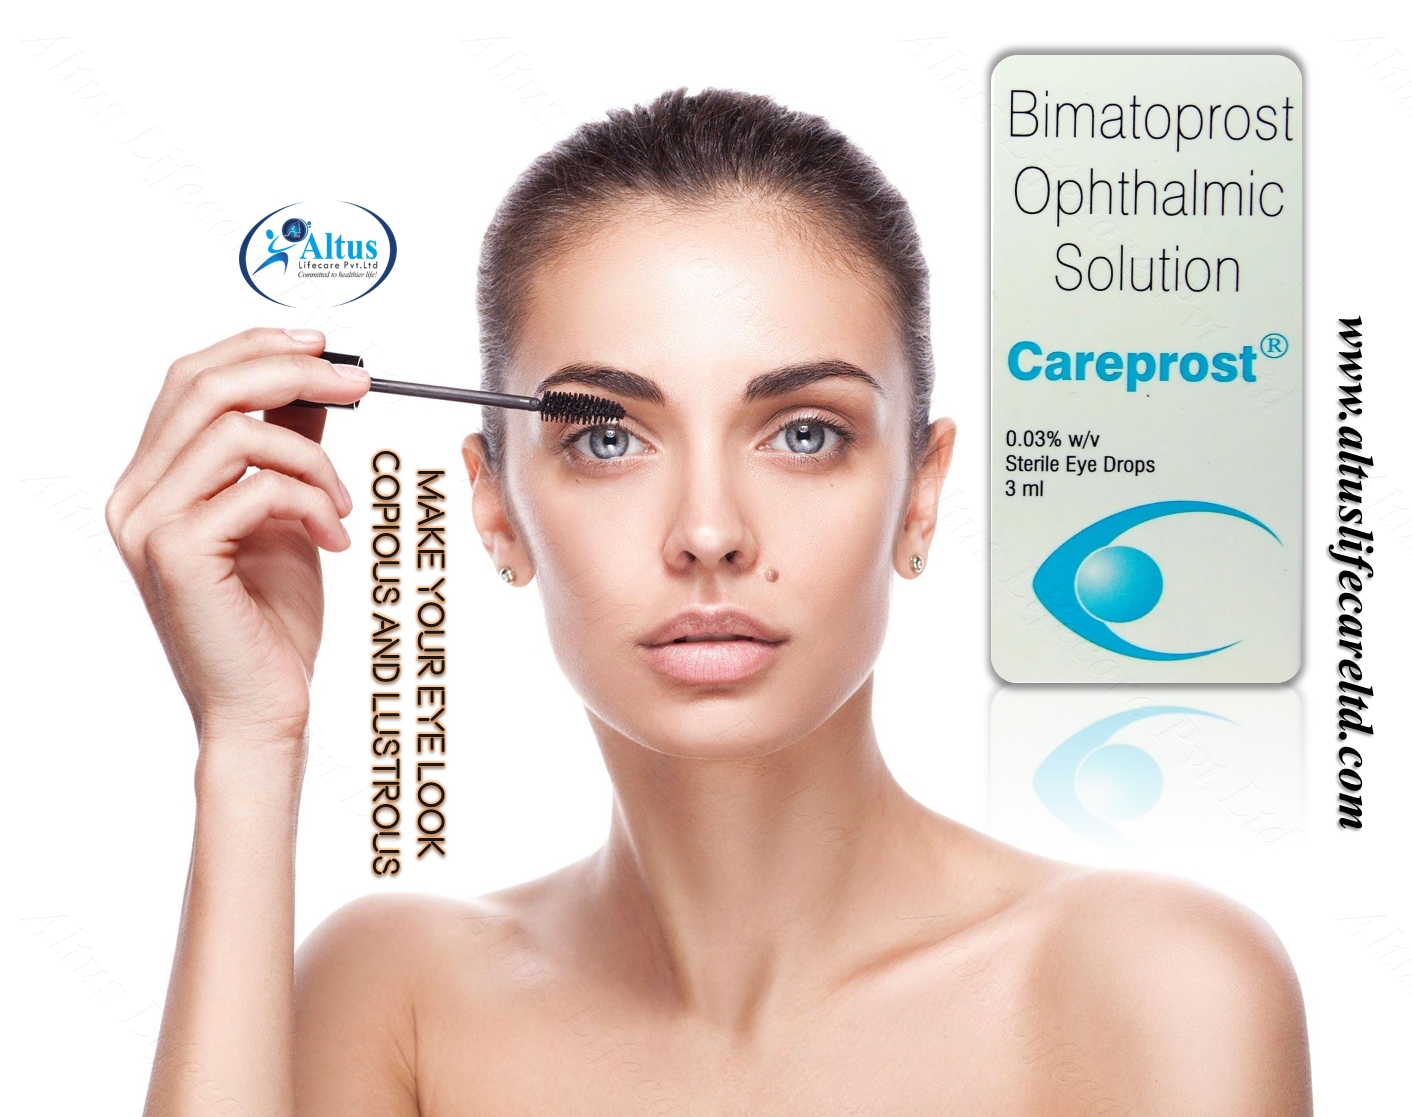 Buy Bimatoprost online and enjoy Double Safety of your Eyes | Careprost 0.03%